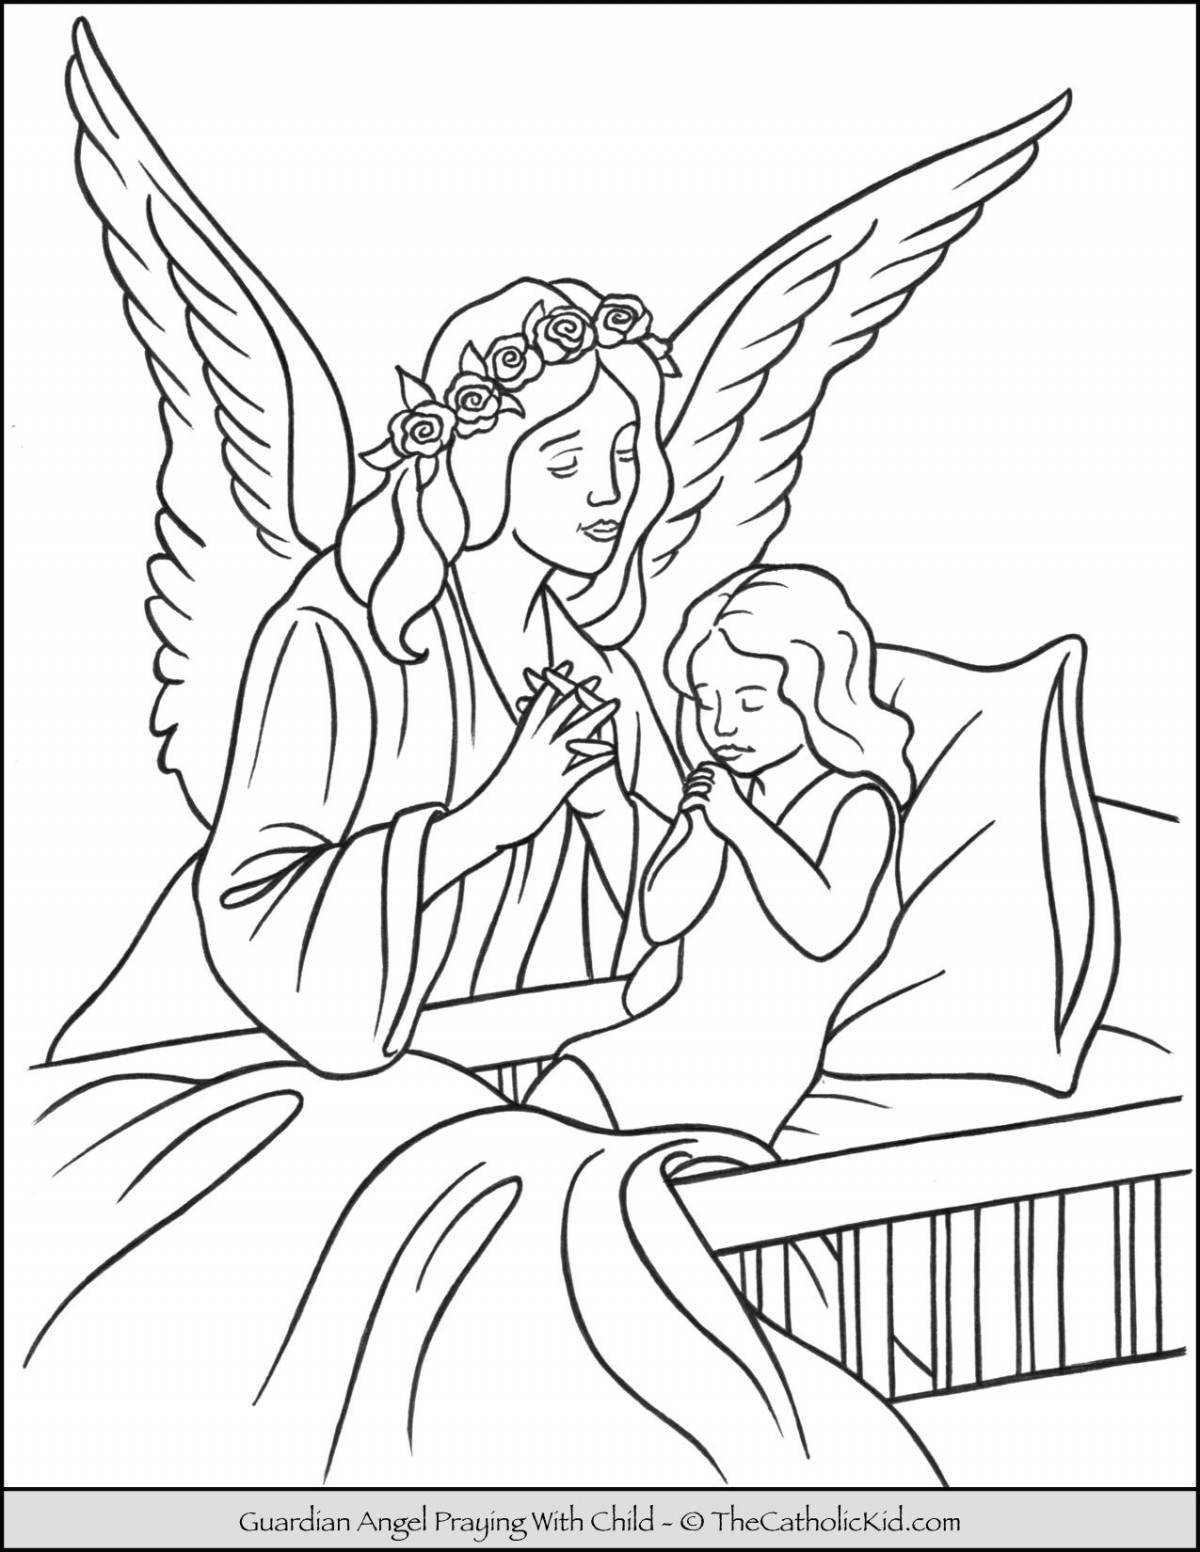 Inspirational guardian angel coloring book